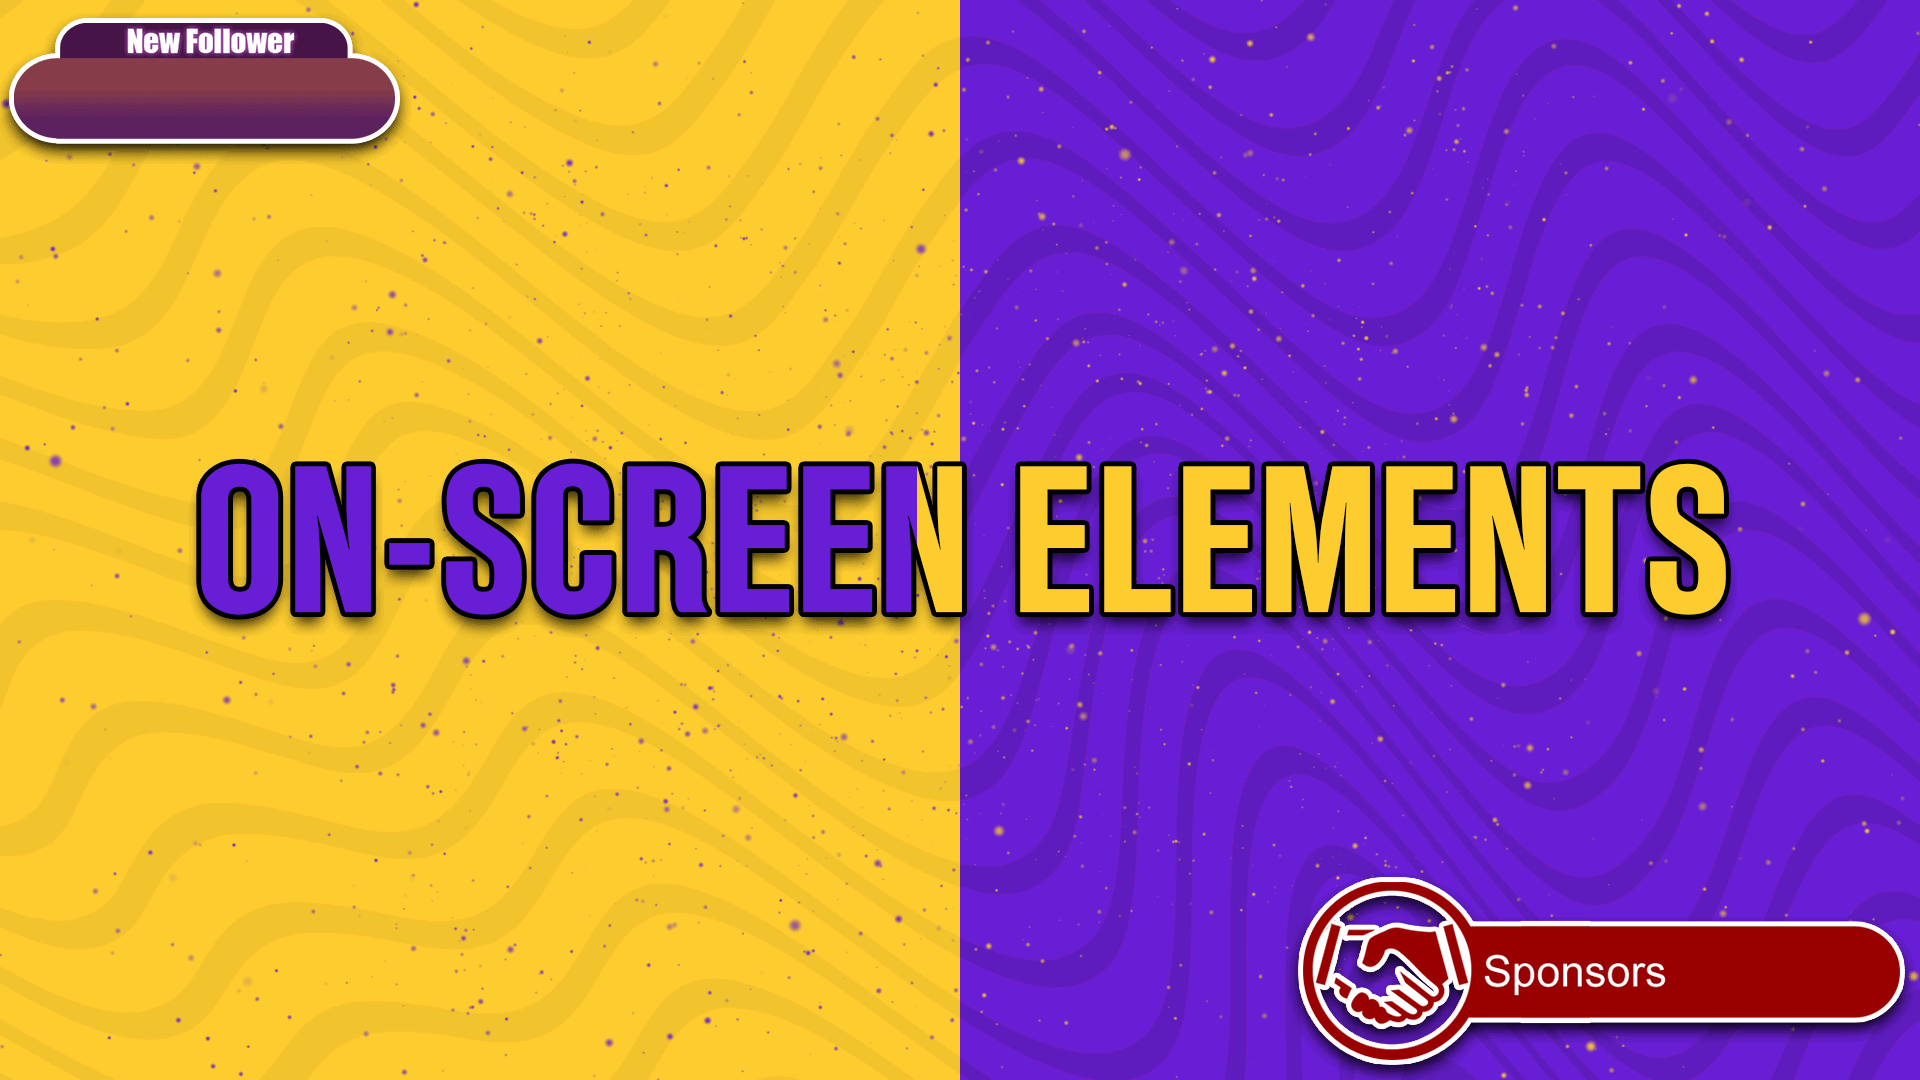 On screen elements - StreamBee